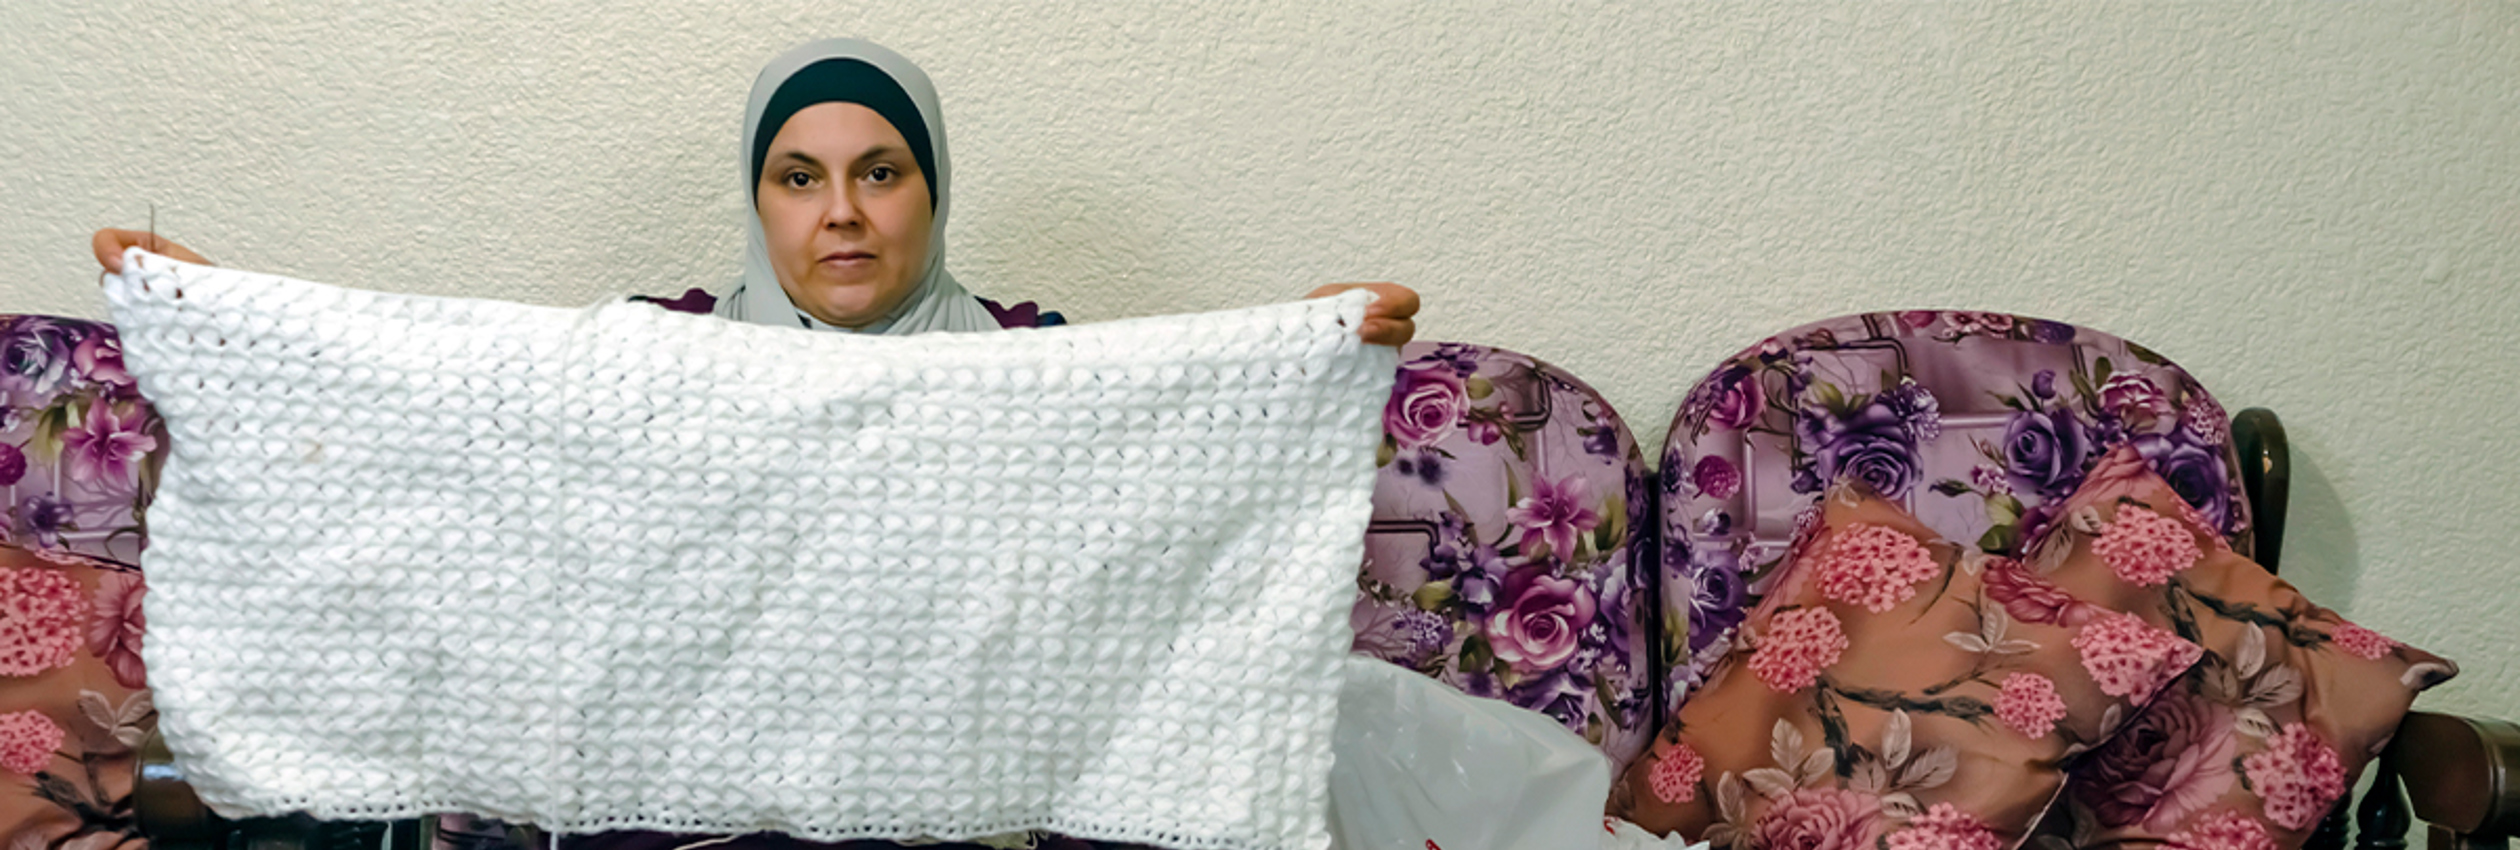 Zuzan uses her craft skills to provide for her family.  © UNHCR/Hazm Almazouni